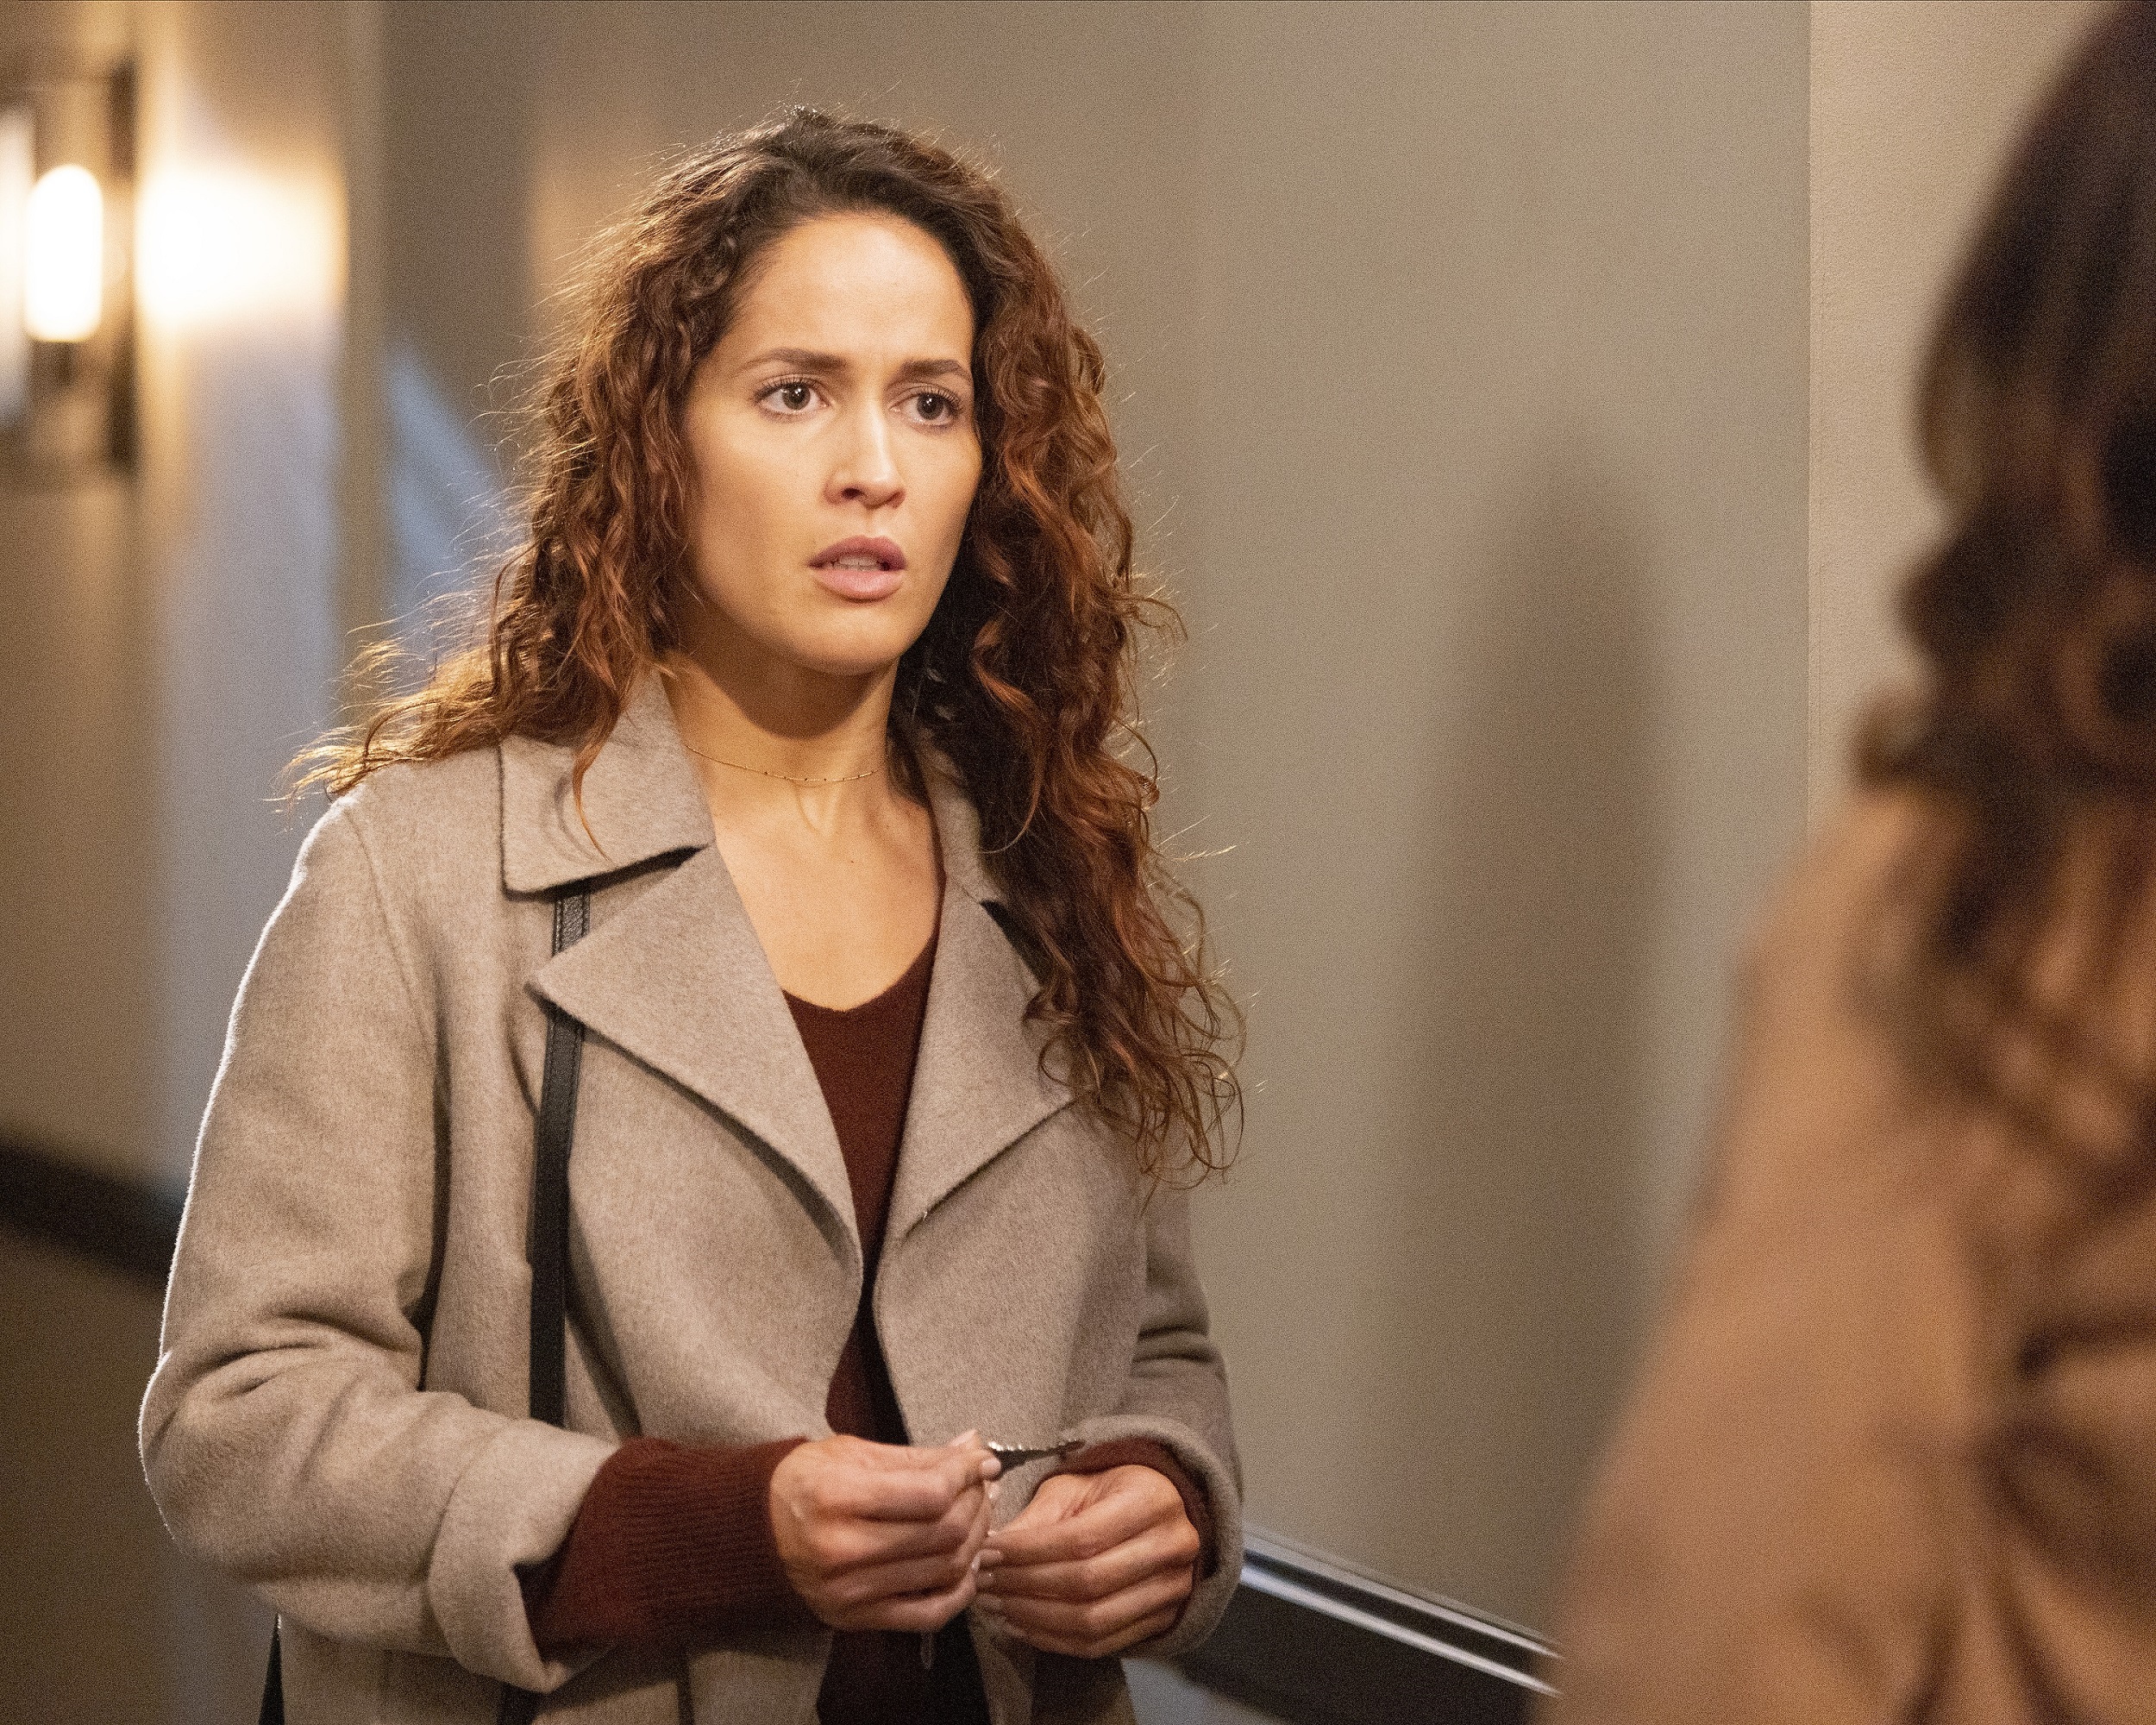 'Station 19' season 5 Jaina Lee Ortiz looks shocked as Andy Herrera